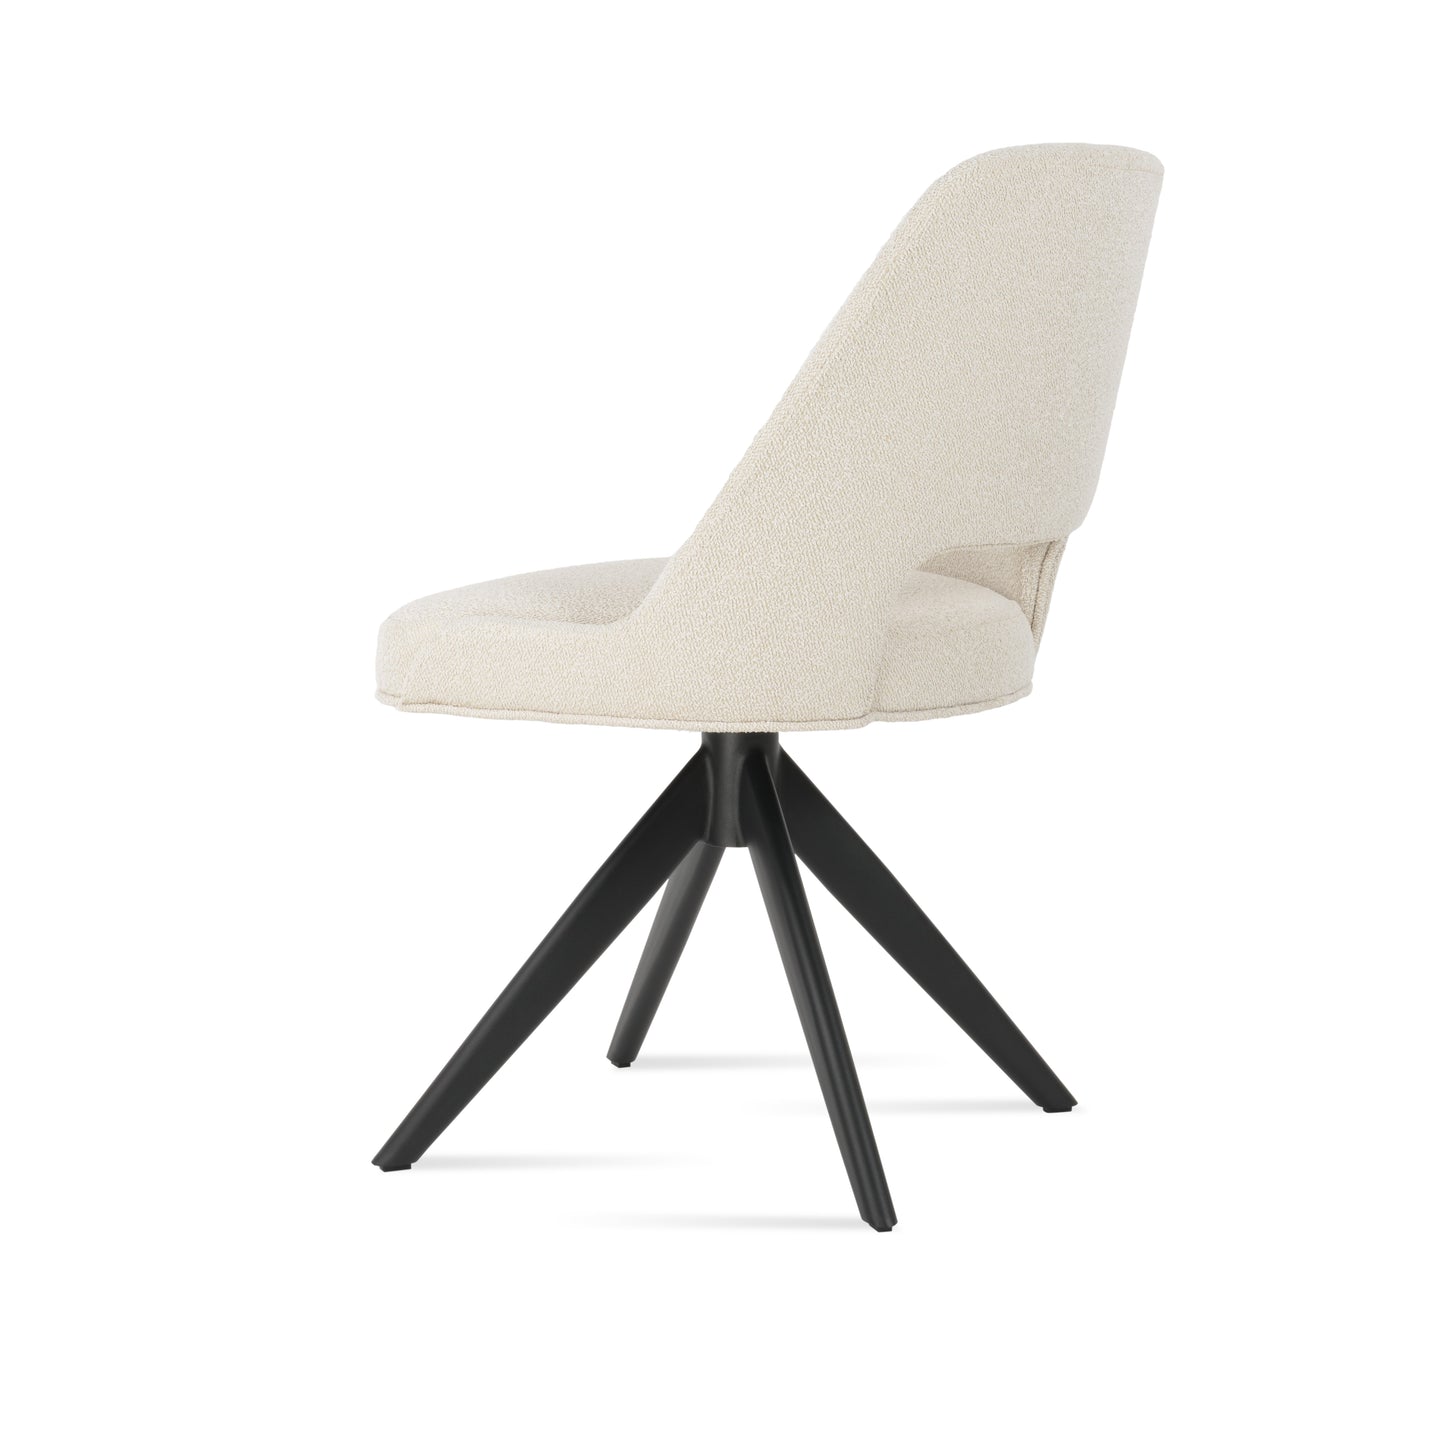 Stylish Marash Chair for Modern Interiors